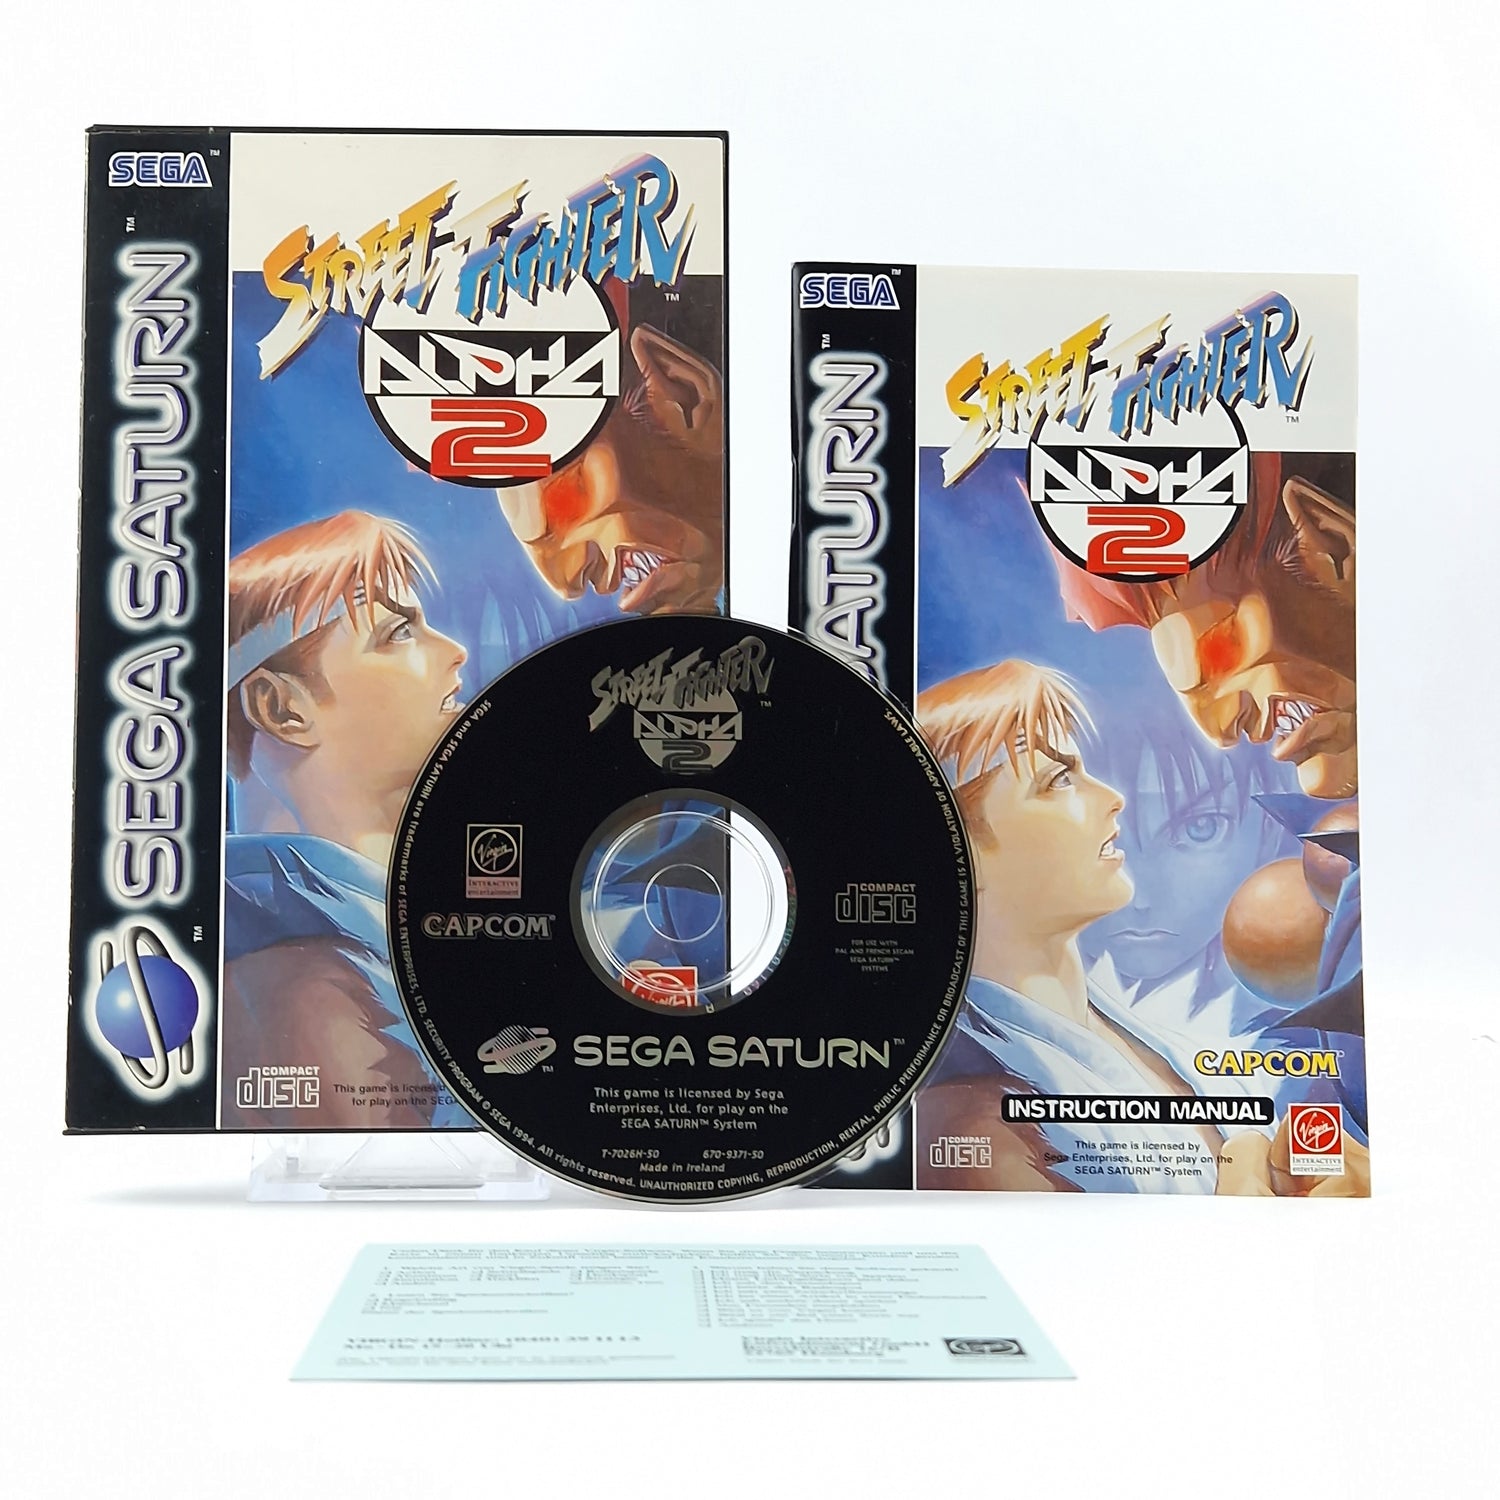 Sega Saturn Game: Street Fighter Alpha 2 - CD Instructions OVP cib / PAL Disk